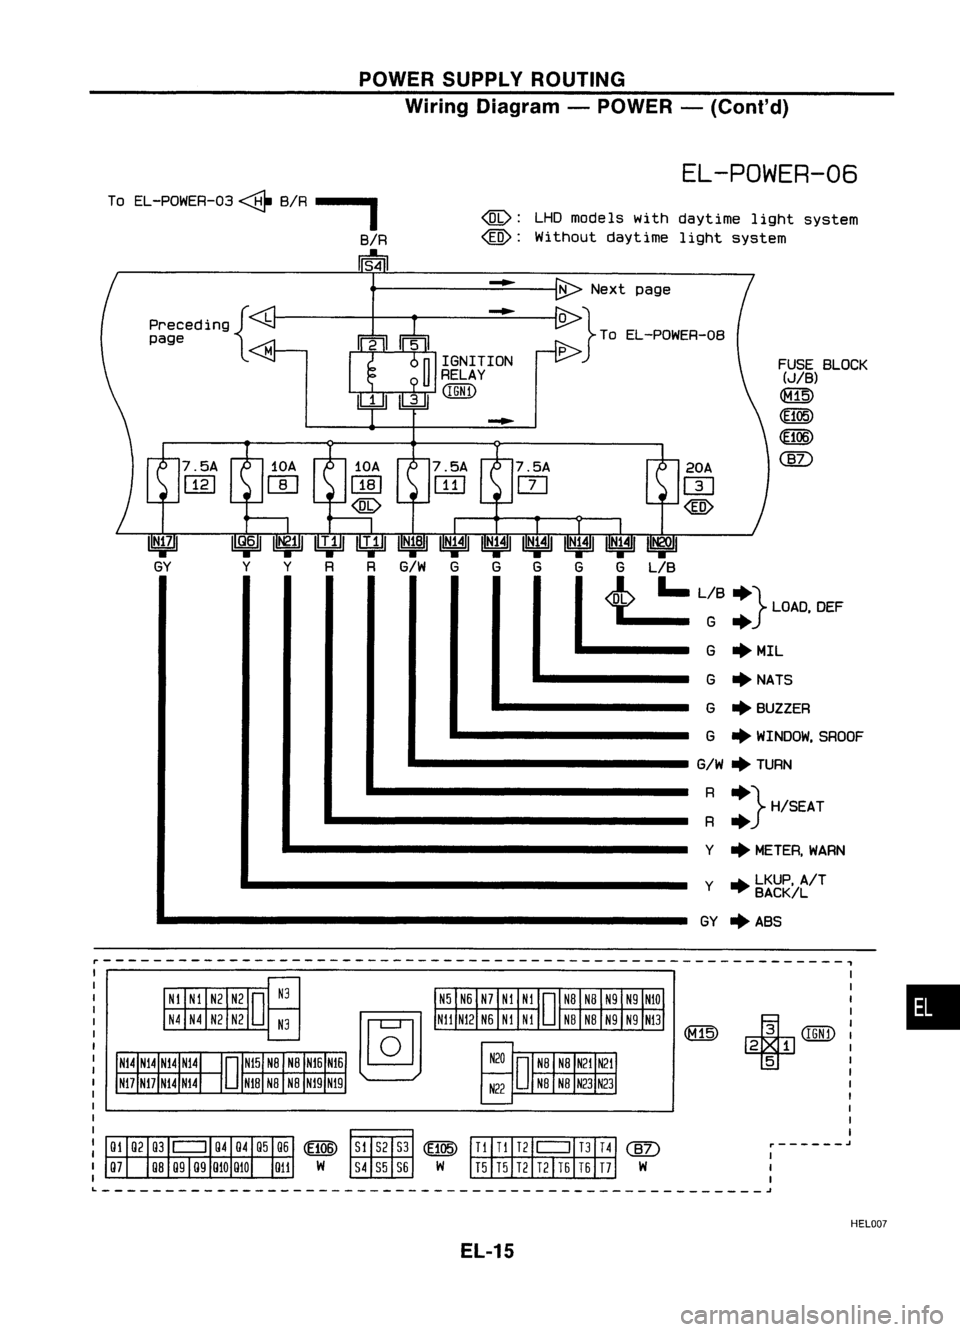 NISSAN ALMERA N15 1995  Service Manual POWERSUPPLY ROUTING
Wiring Diagram -POWER -(Coni' d)

EL-POWER-06

r-----------------------------------------------------------, 
•

FUSE
BLOCK

(JIB)

<fill)

(E105)

(f106)

@)

+ 
(IGNl)

2 1